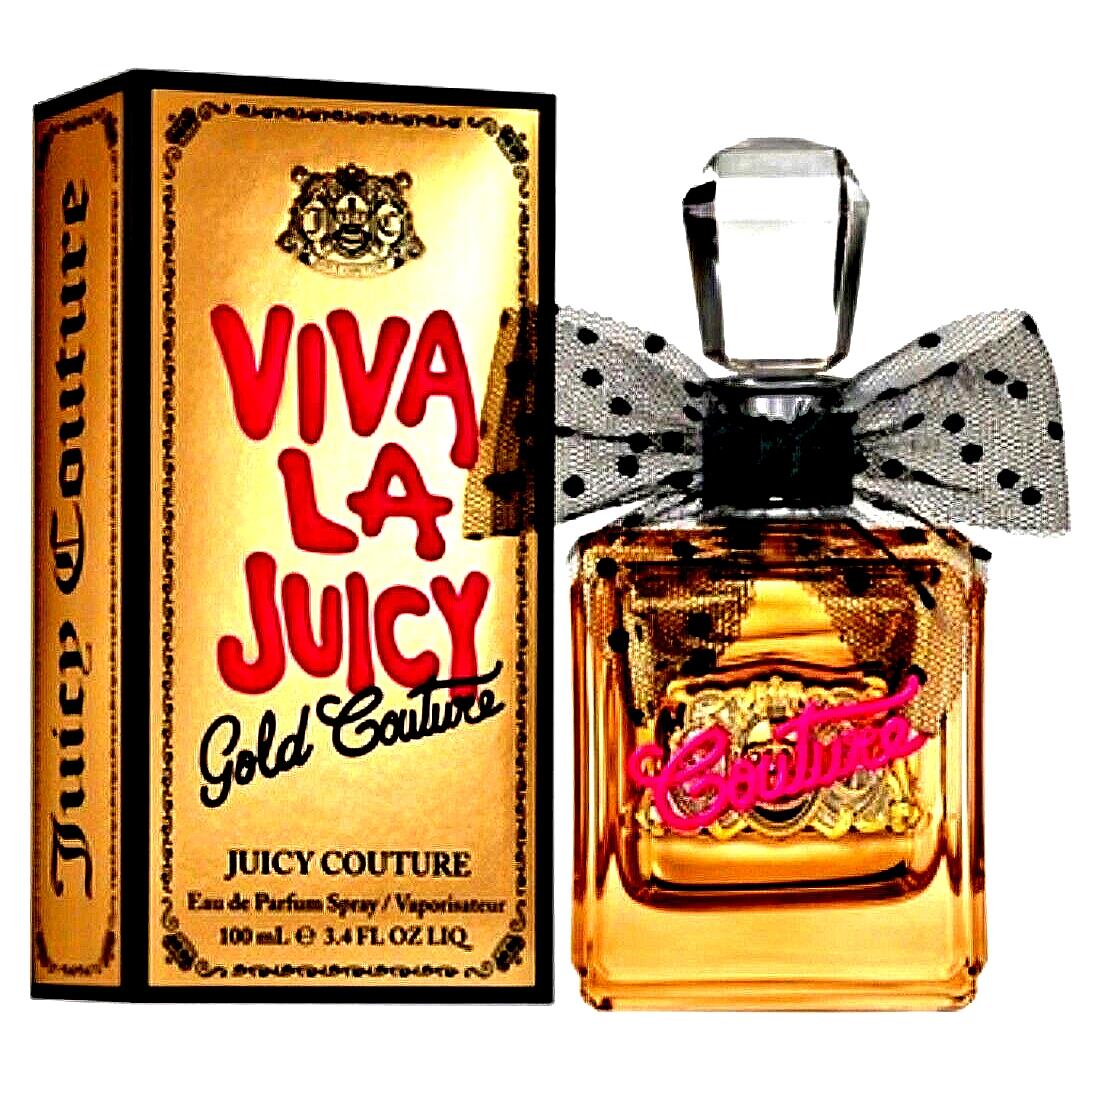 Juicy Couture Viva LA Juicy Gold Couture Eau DE Parfum Spray 1.7 OZ